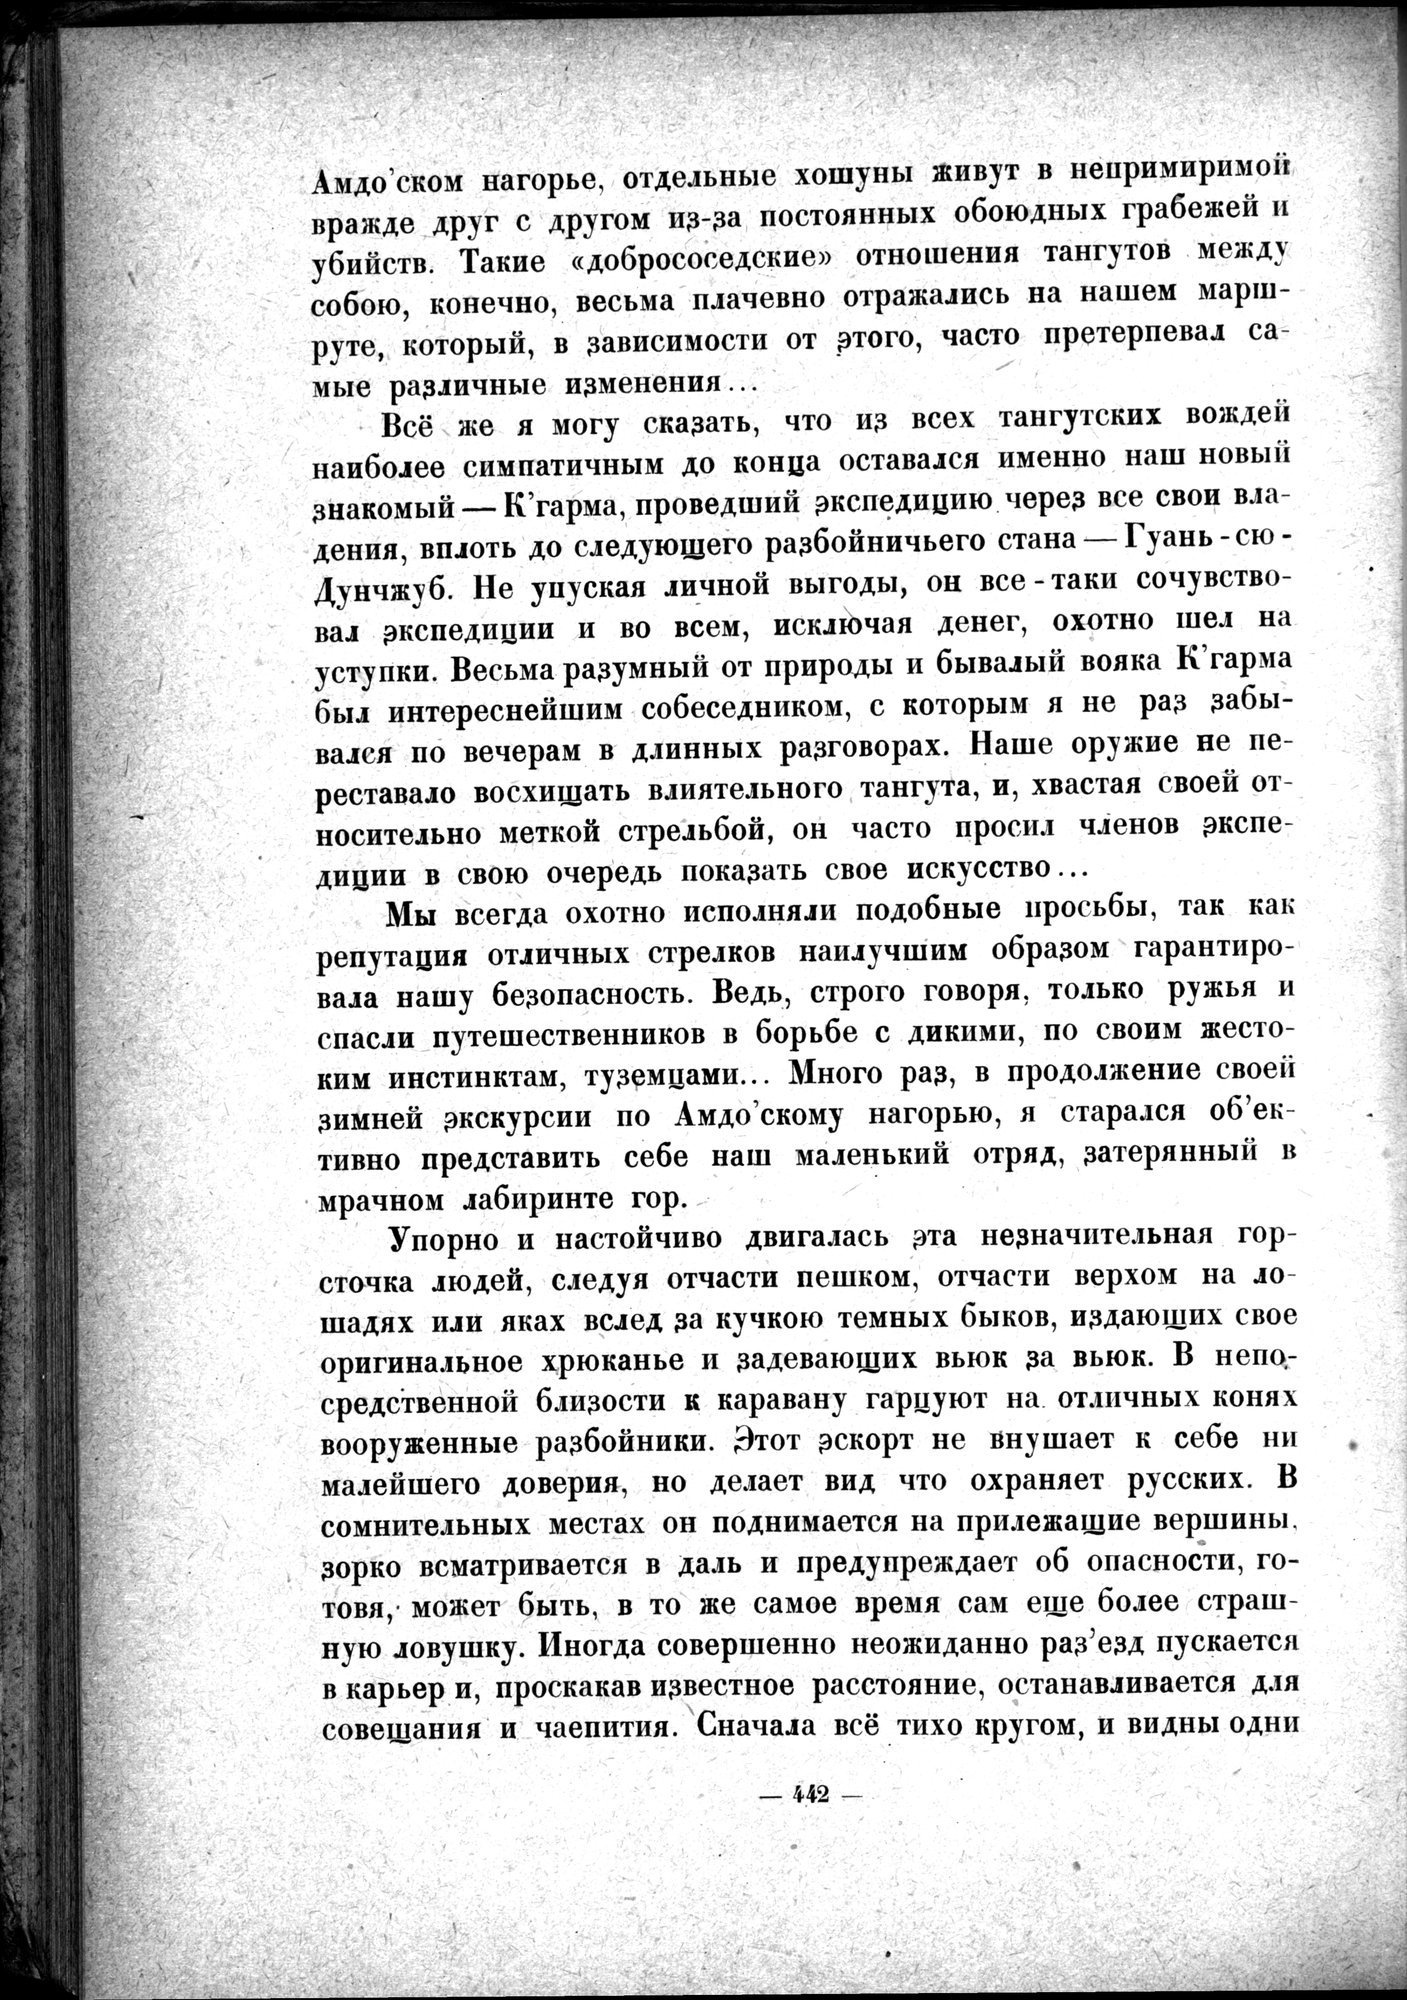 Mongoliya i Amdo i mertby gorod Khara-Khoto : vol.1 / Page 504 (Grayscale High Resolution Image)